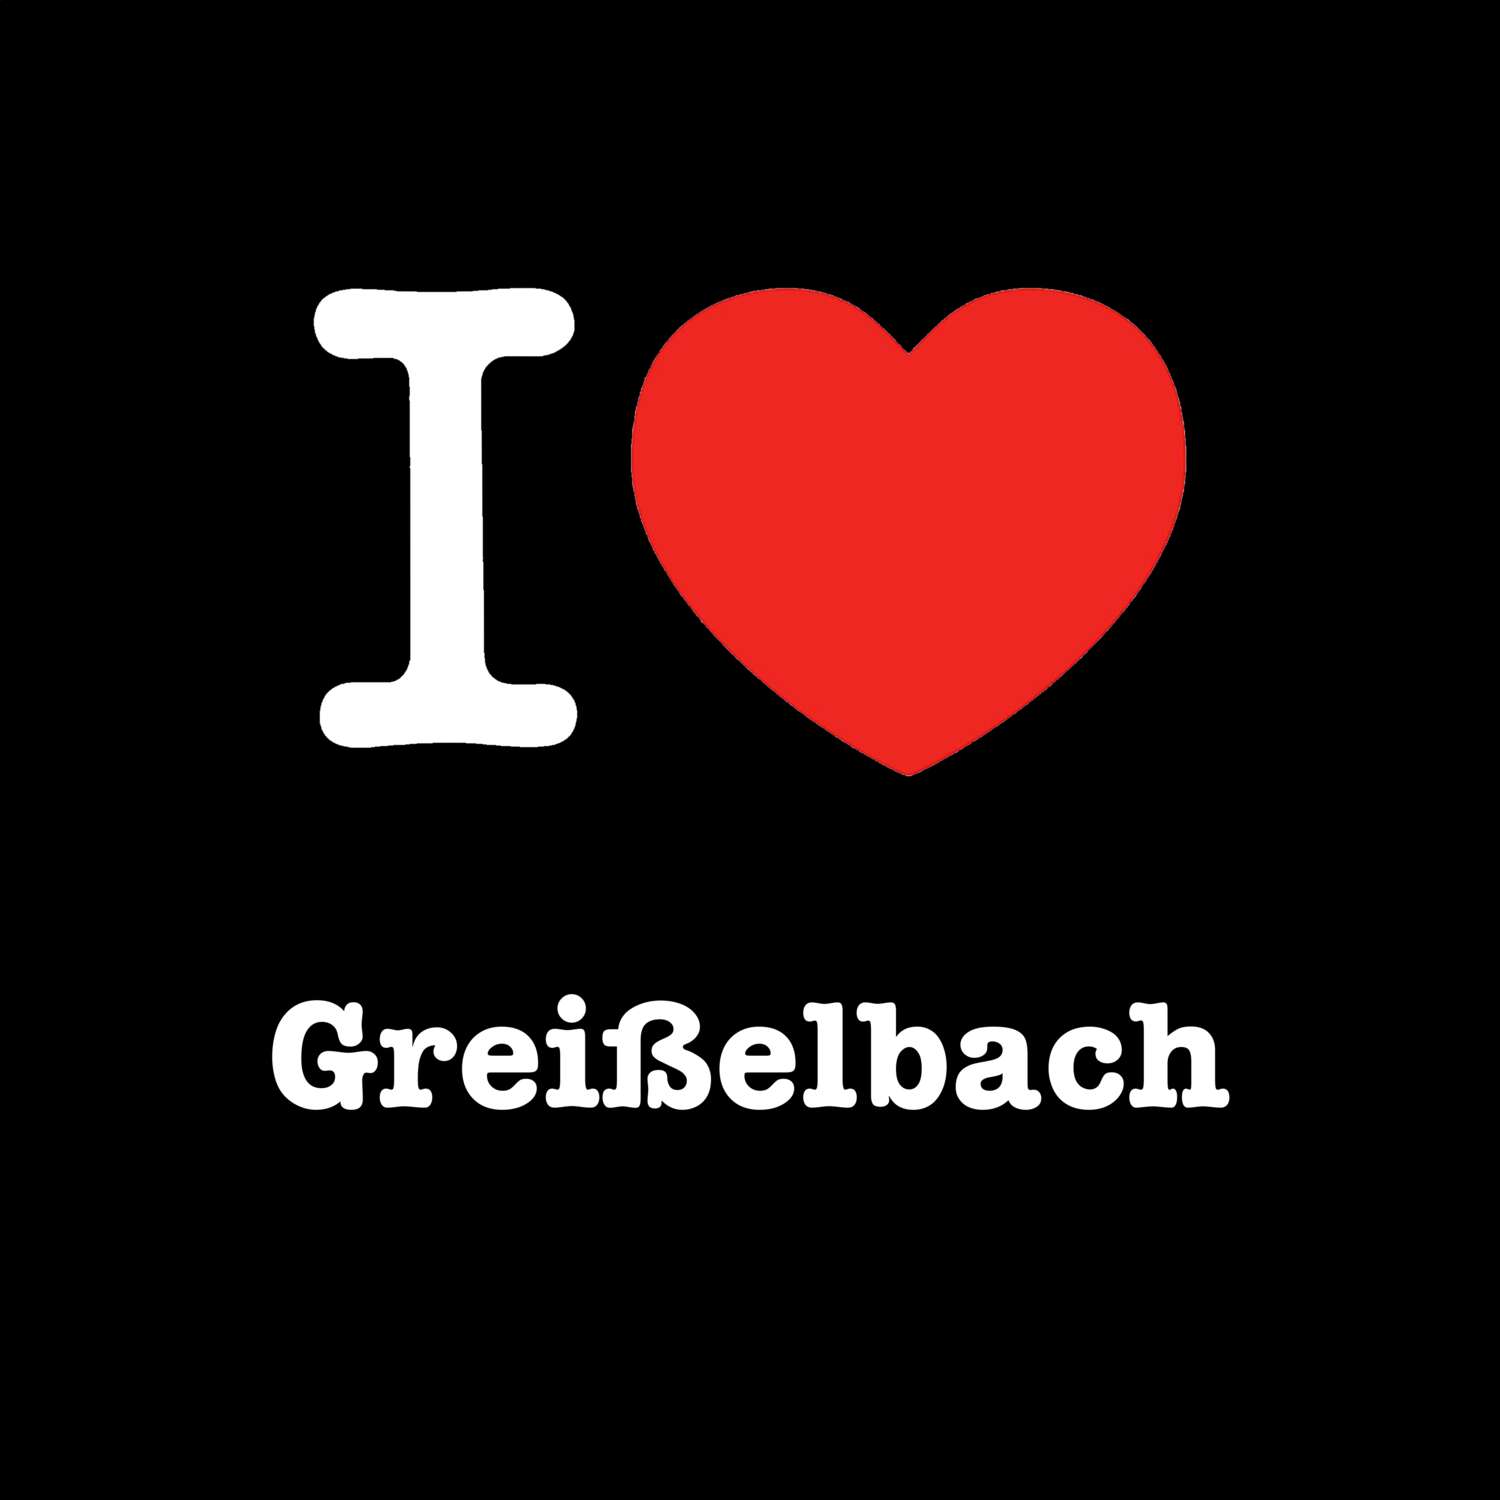 Greißelbach T-Shirt »I love«